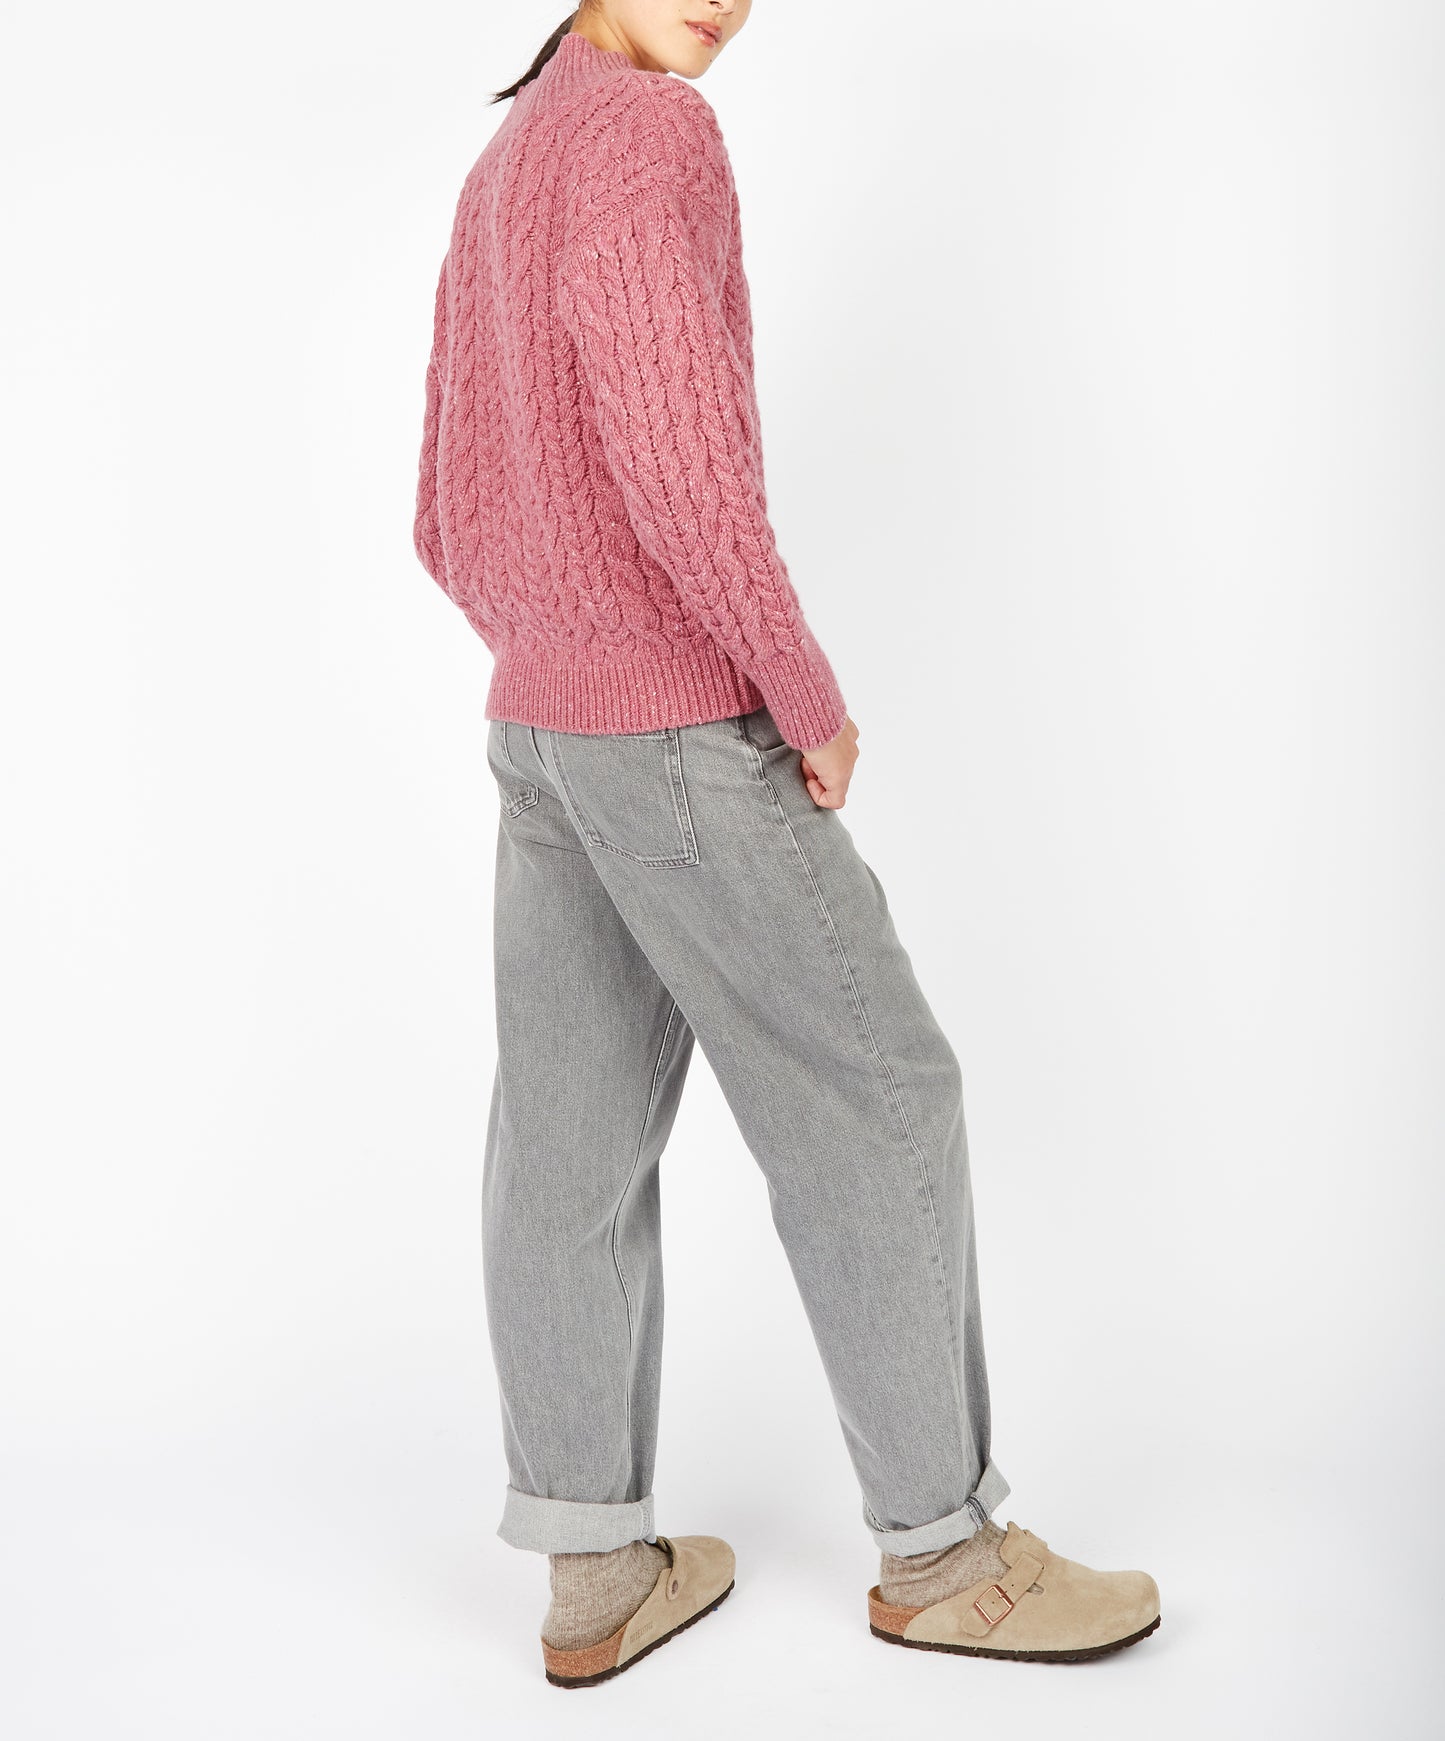 IrelandsEye Knitwear Mill Lane Cable V-neck Sweater Bubblegum pink